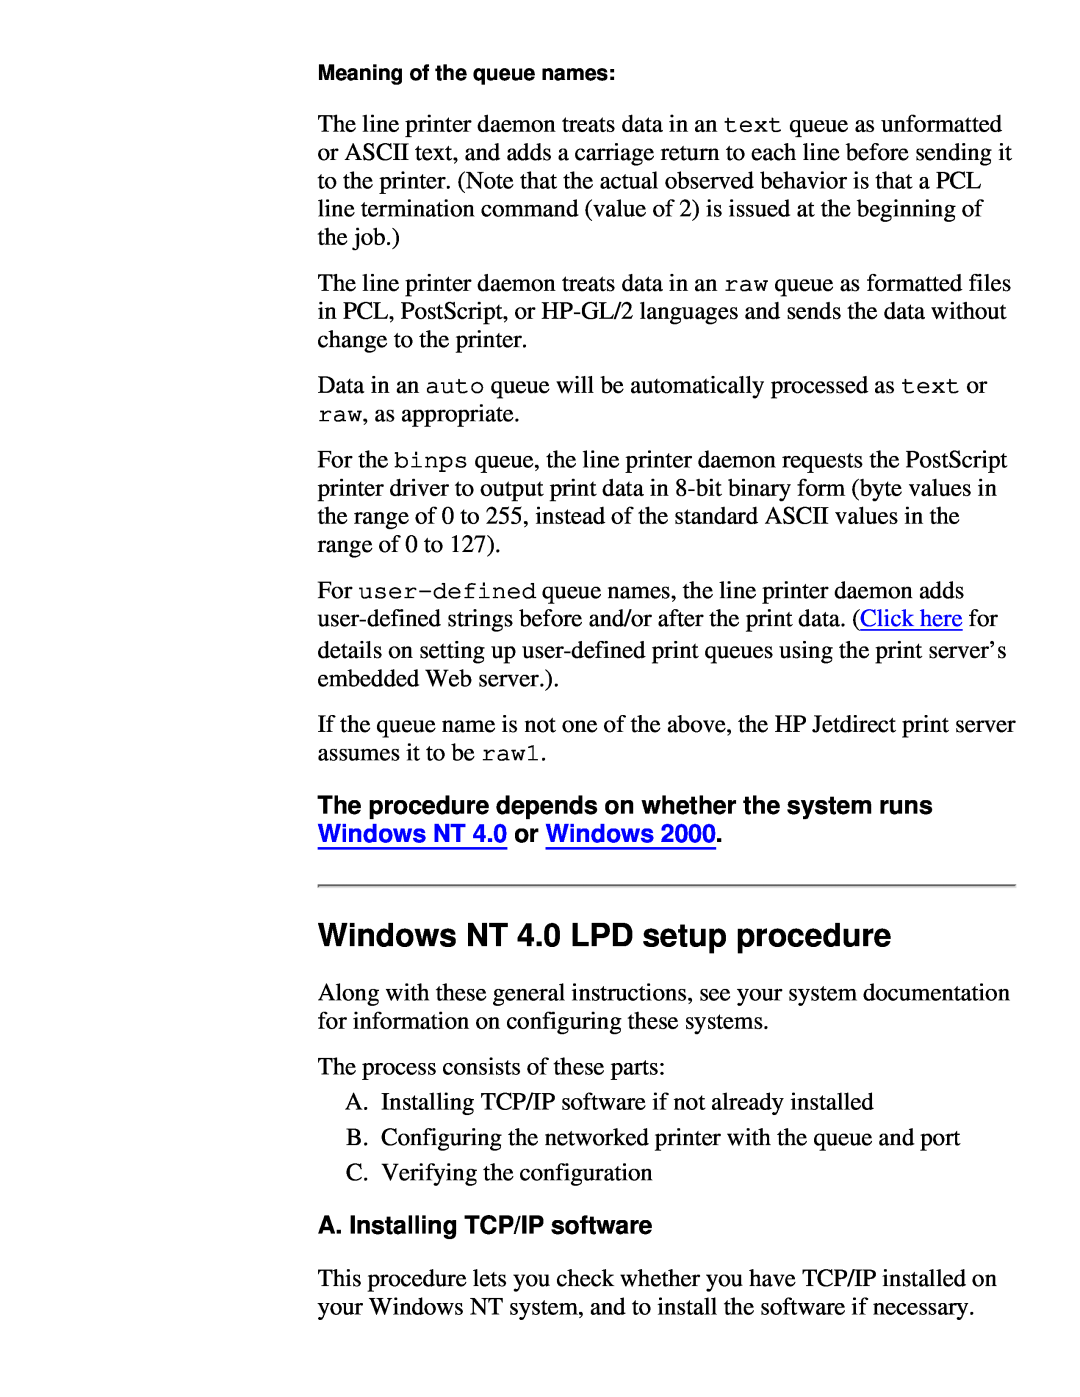 HP 310X, 175X manual Windows NT 4.0 LPD setup procedure, A. Installing TCP/IP software 